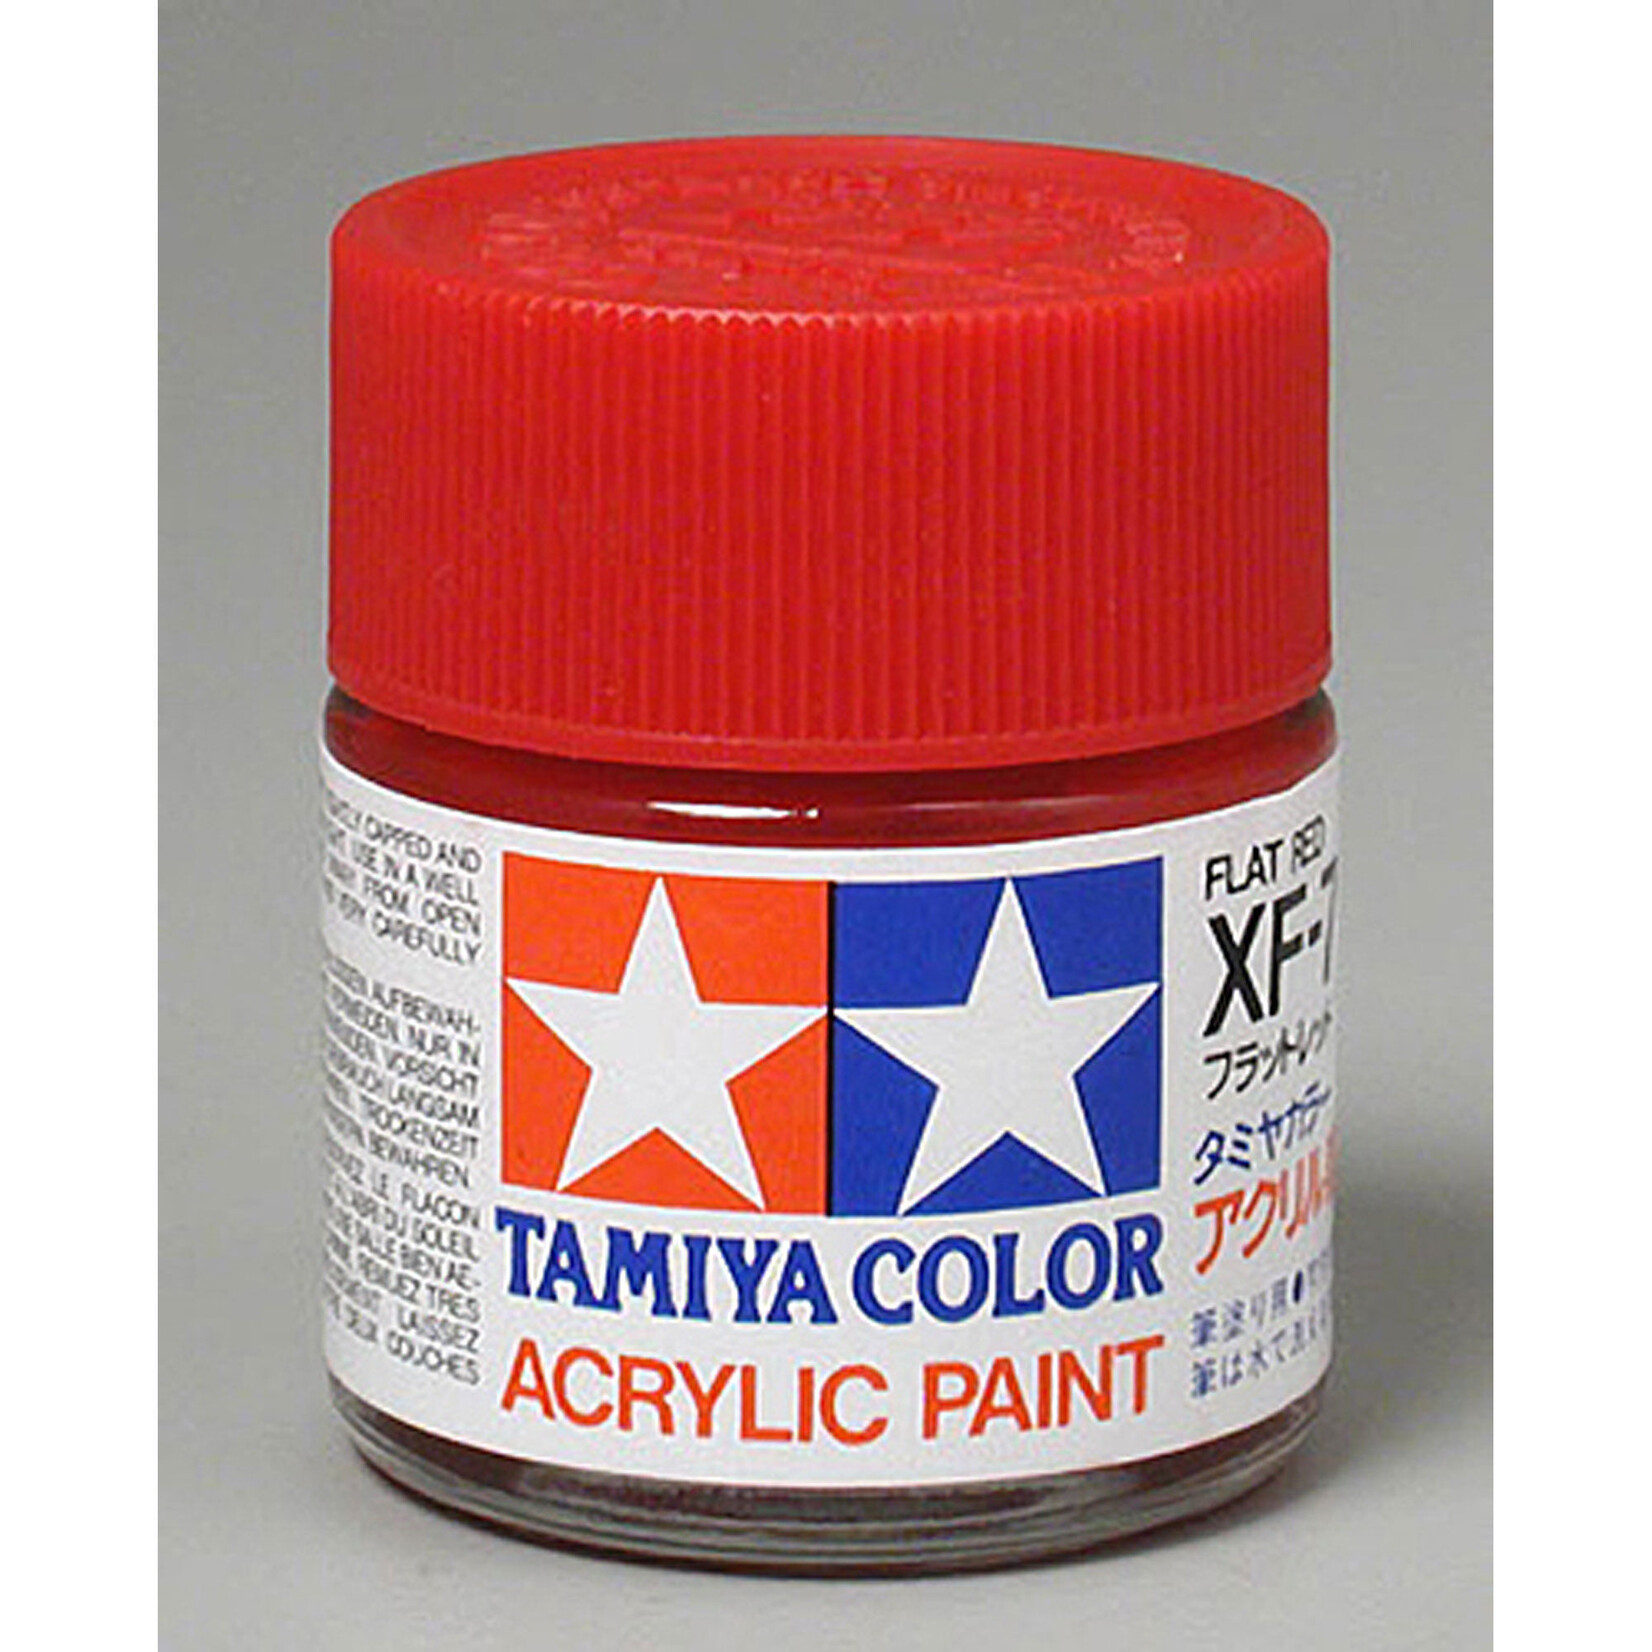 Tamiya Acrylic XF7 Flat, Red